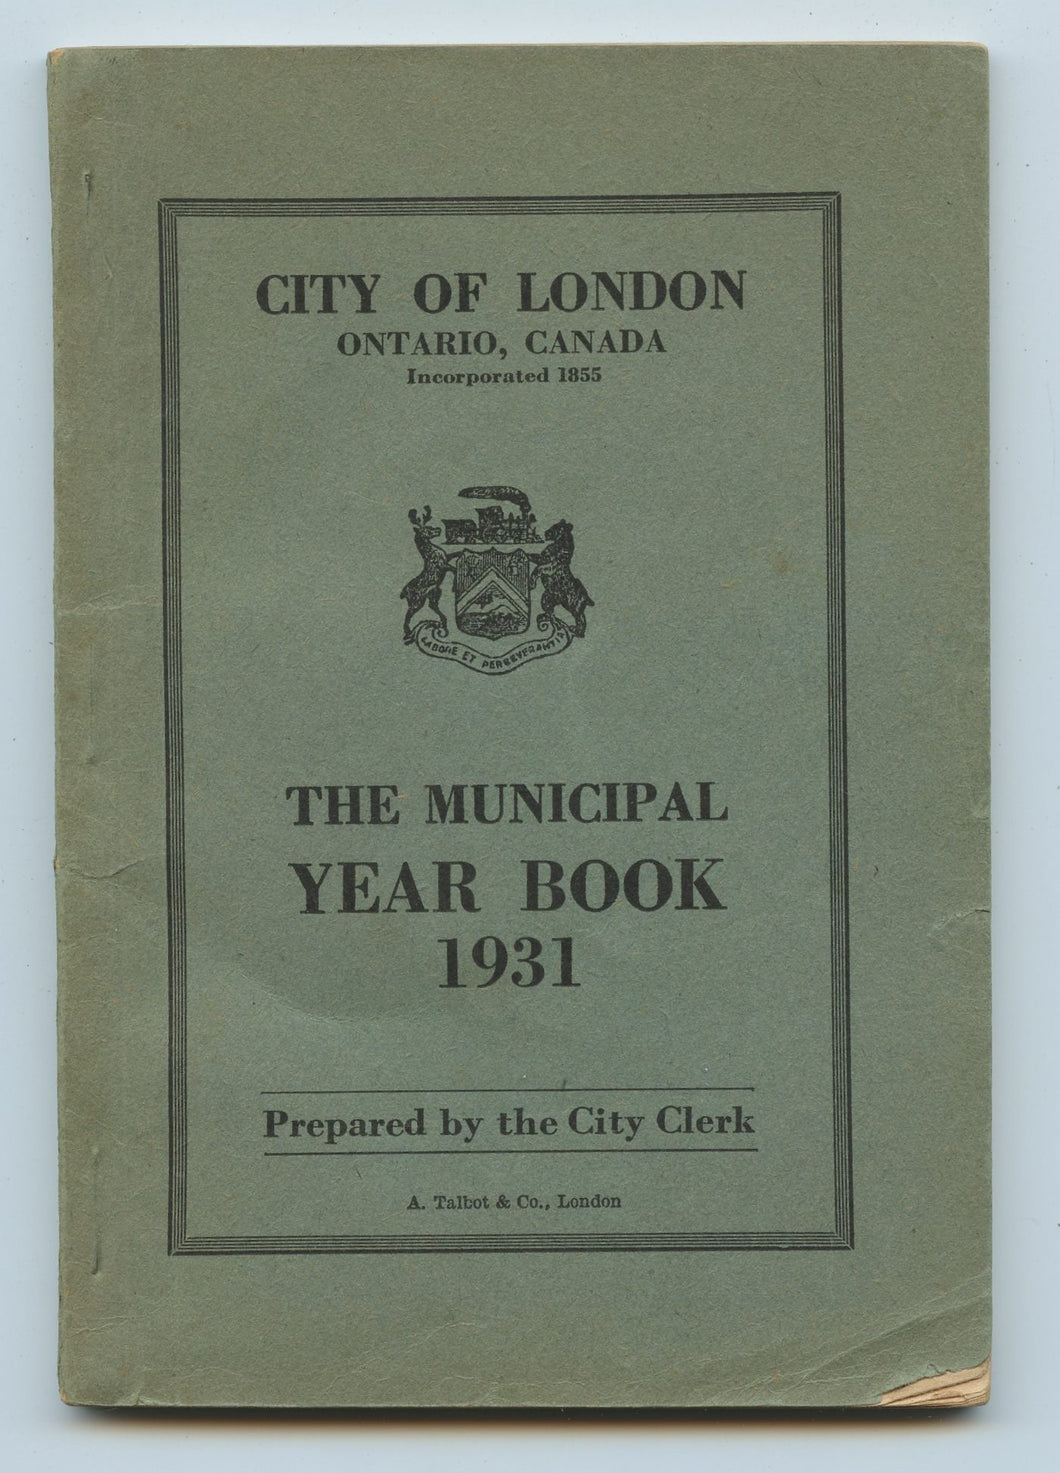 London Ontario Municipal Year Book 1931